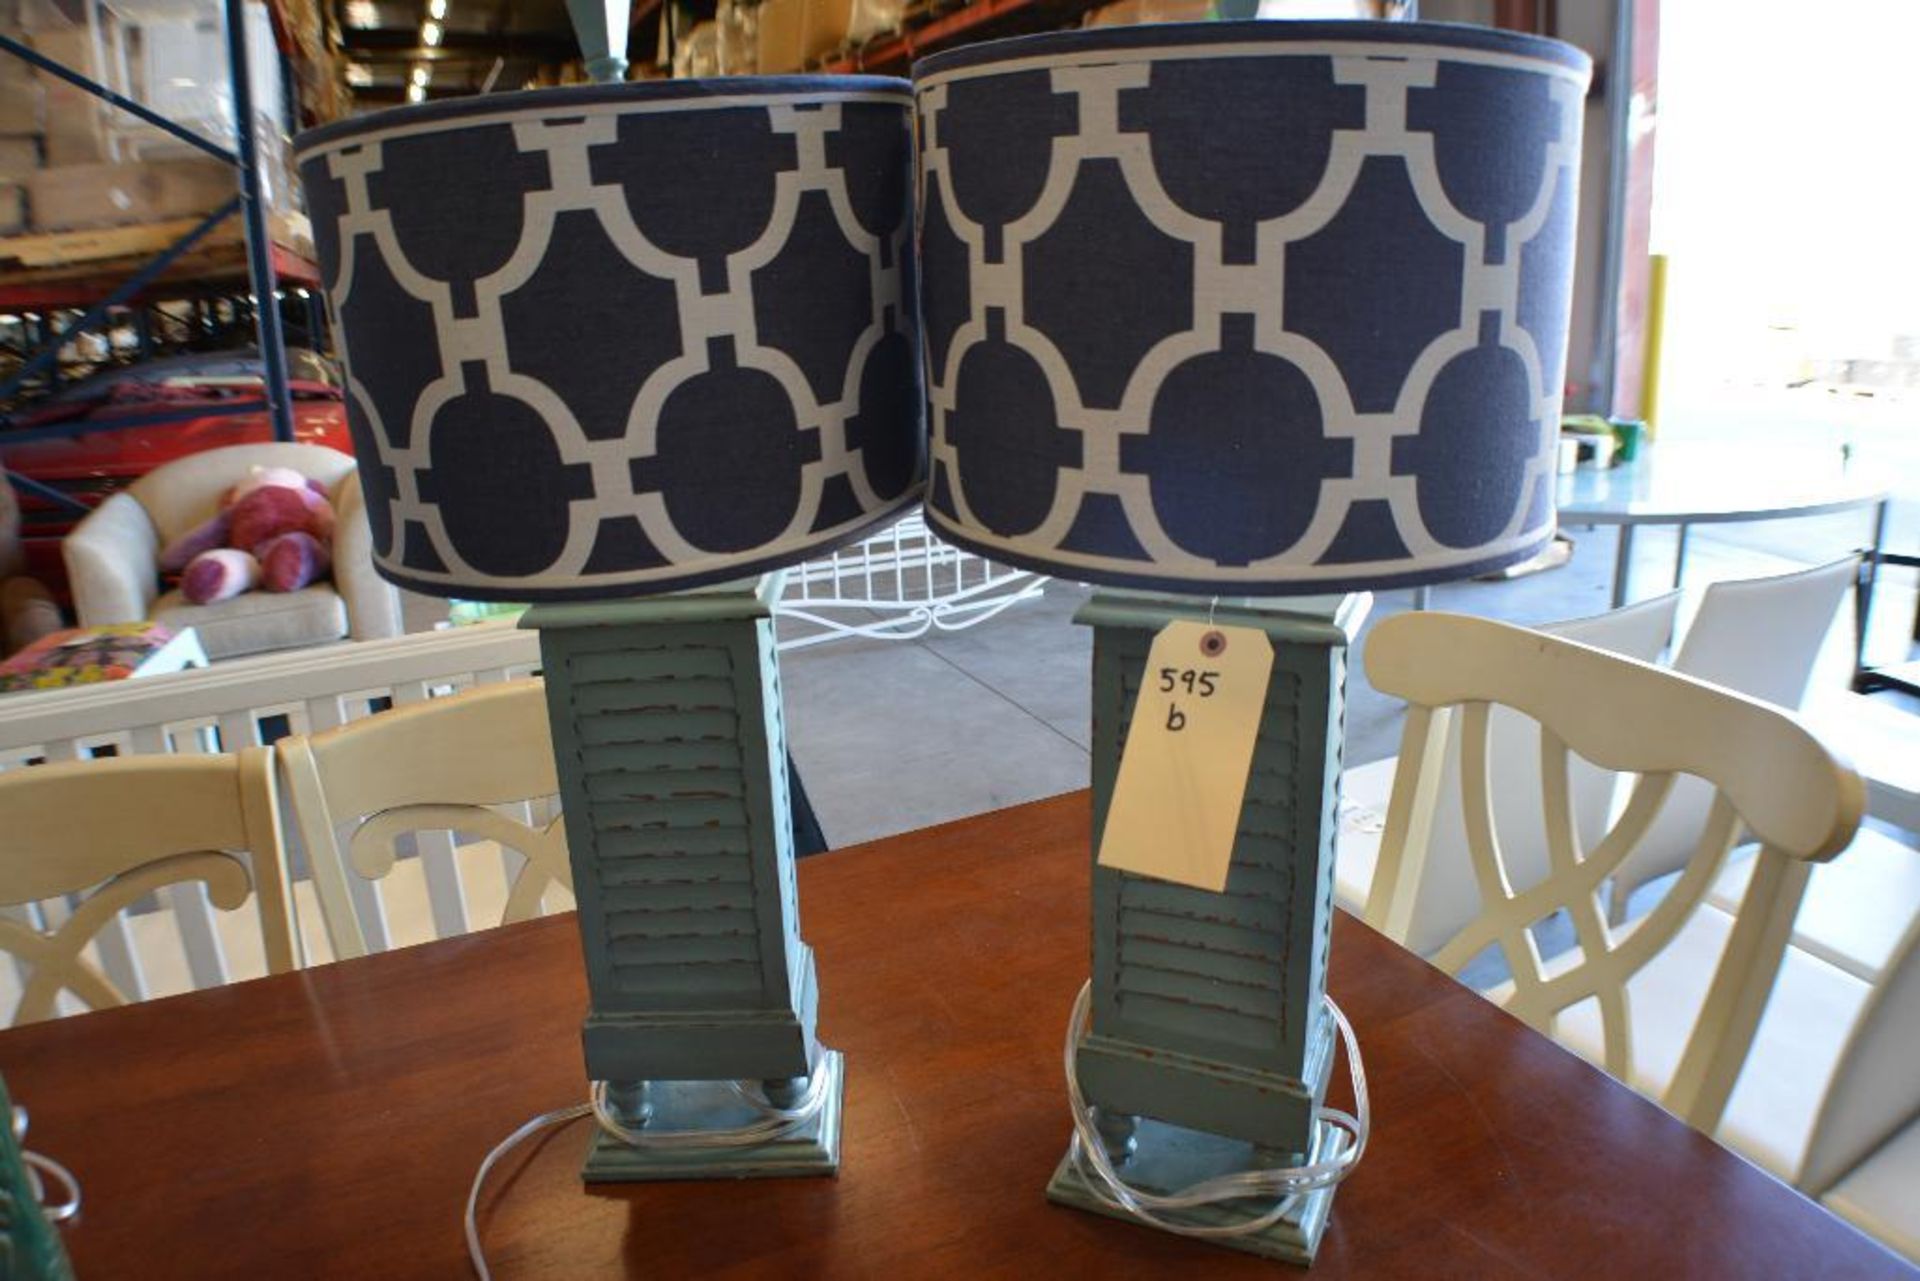 Pair of Table Lamps. Rectangular green ceramic base shutter style design. Black and white geometric